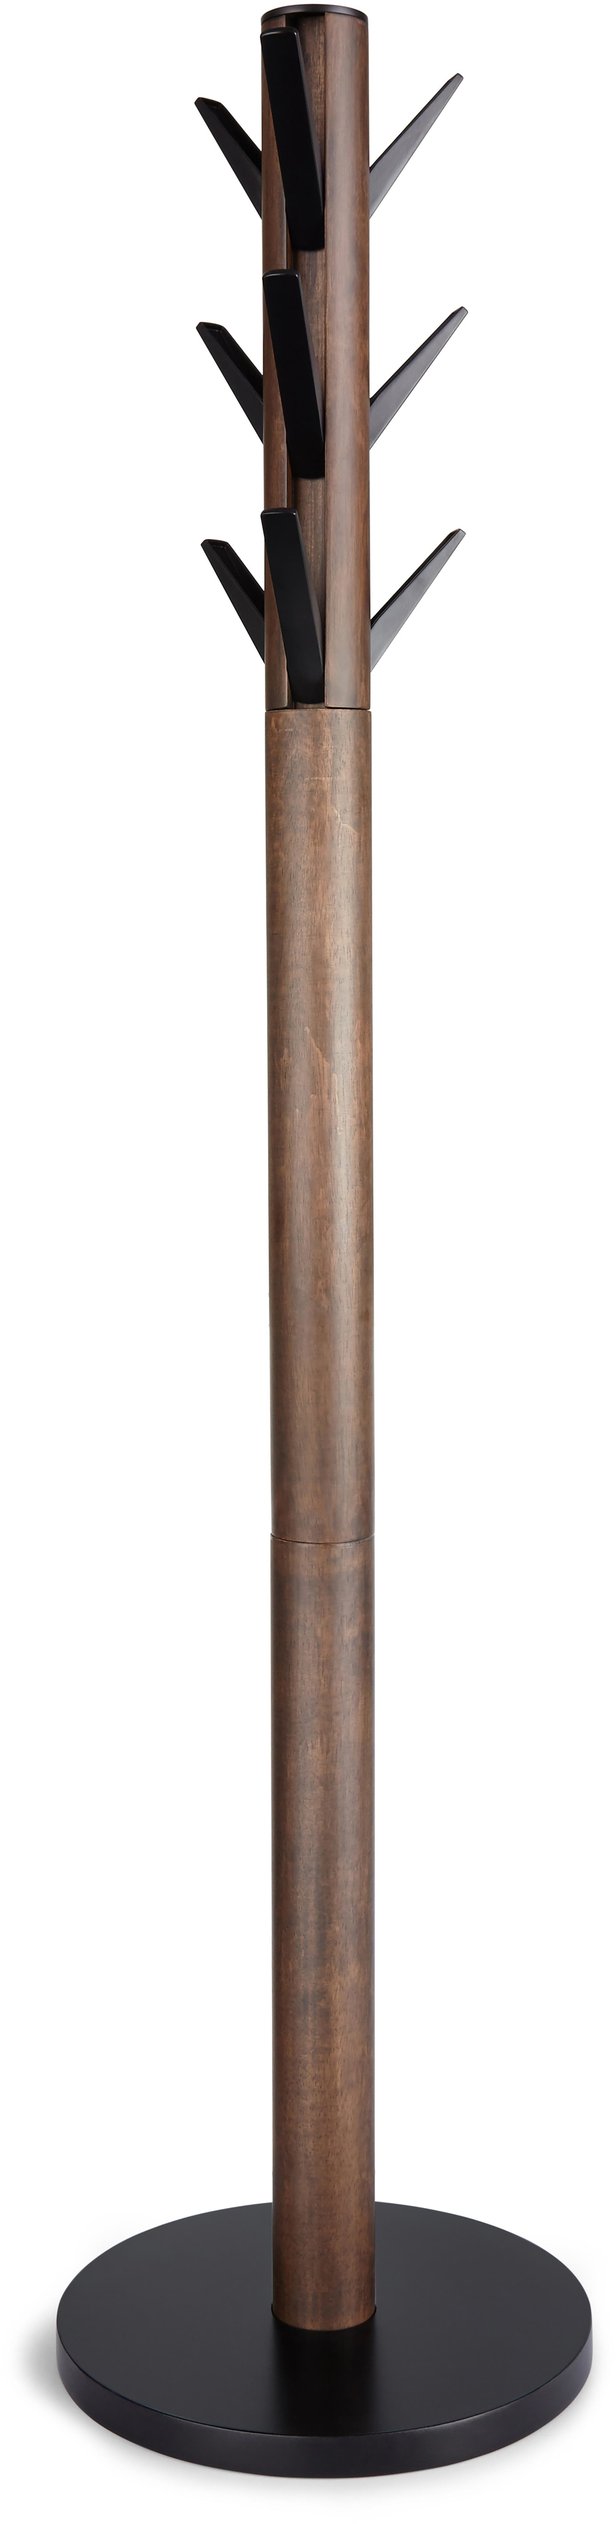 Umbra Flapper naulakko 169cm musta/pähkinäpuu